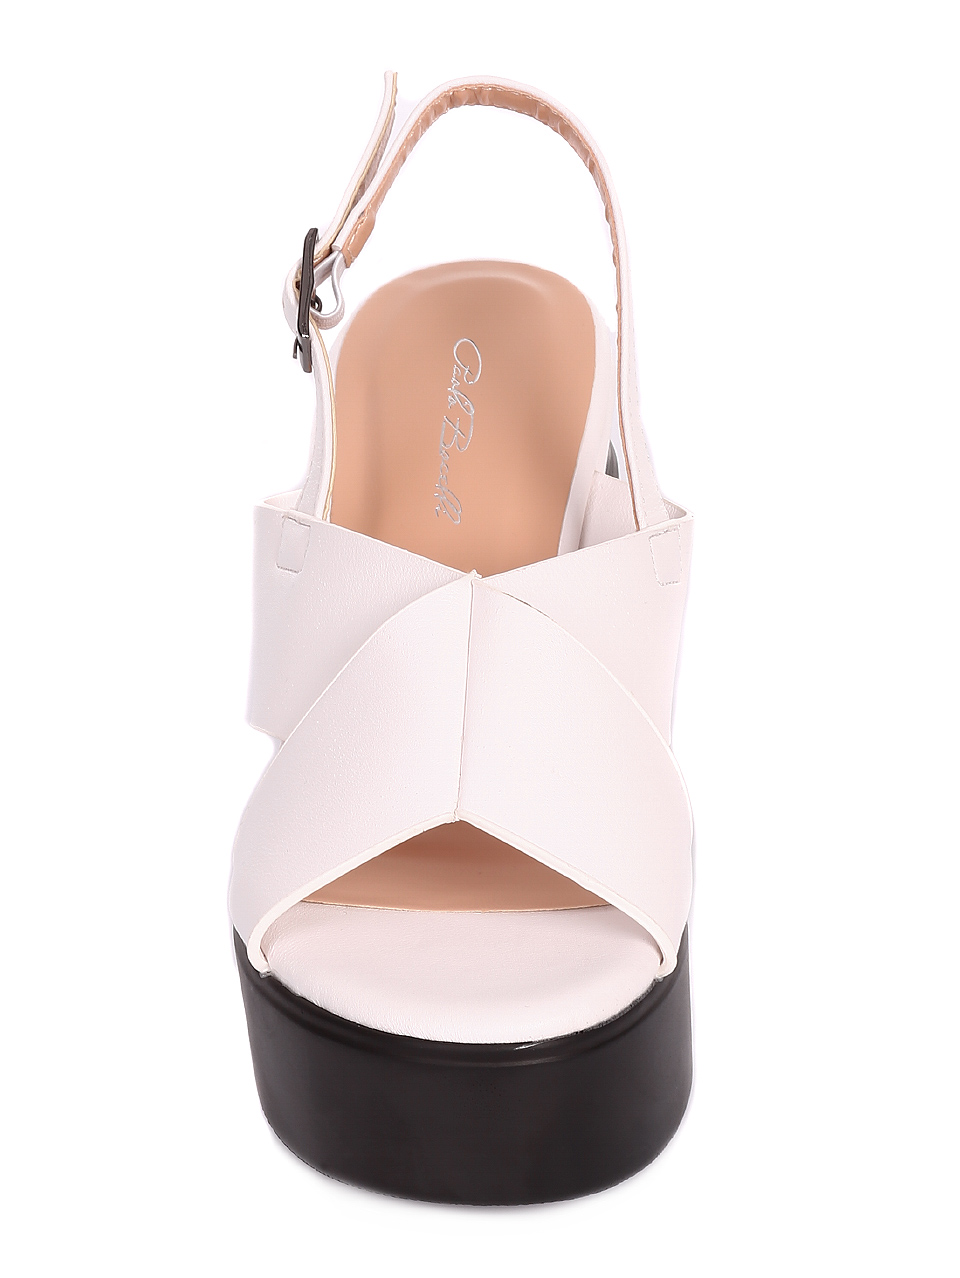 Ежедневни дамски сандали на платформа в бяло 4R-20131 white